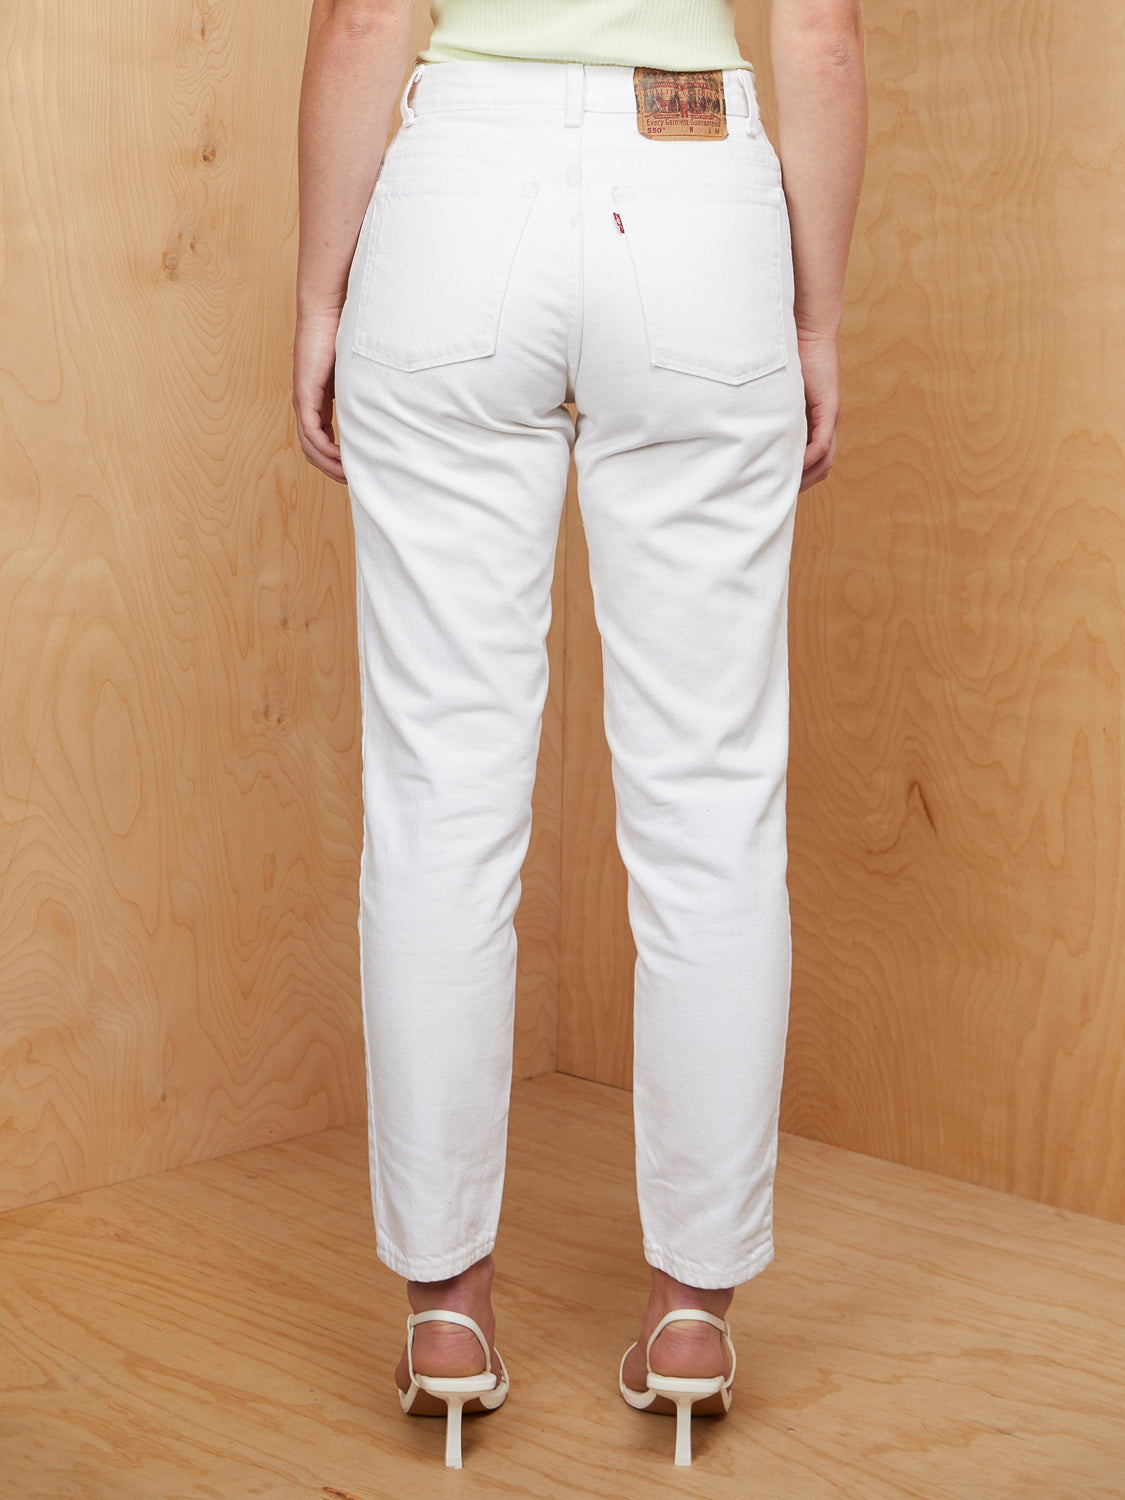 Vintage White 550 Levi's Jeans – Series